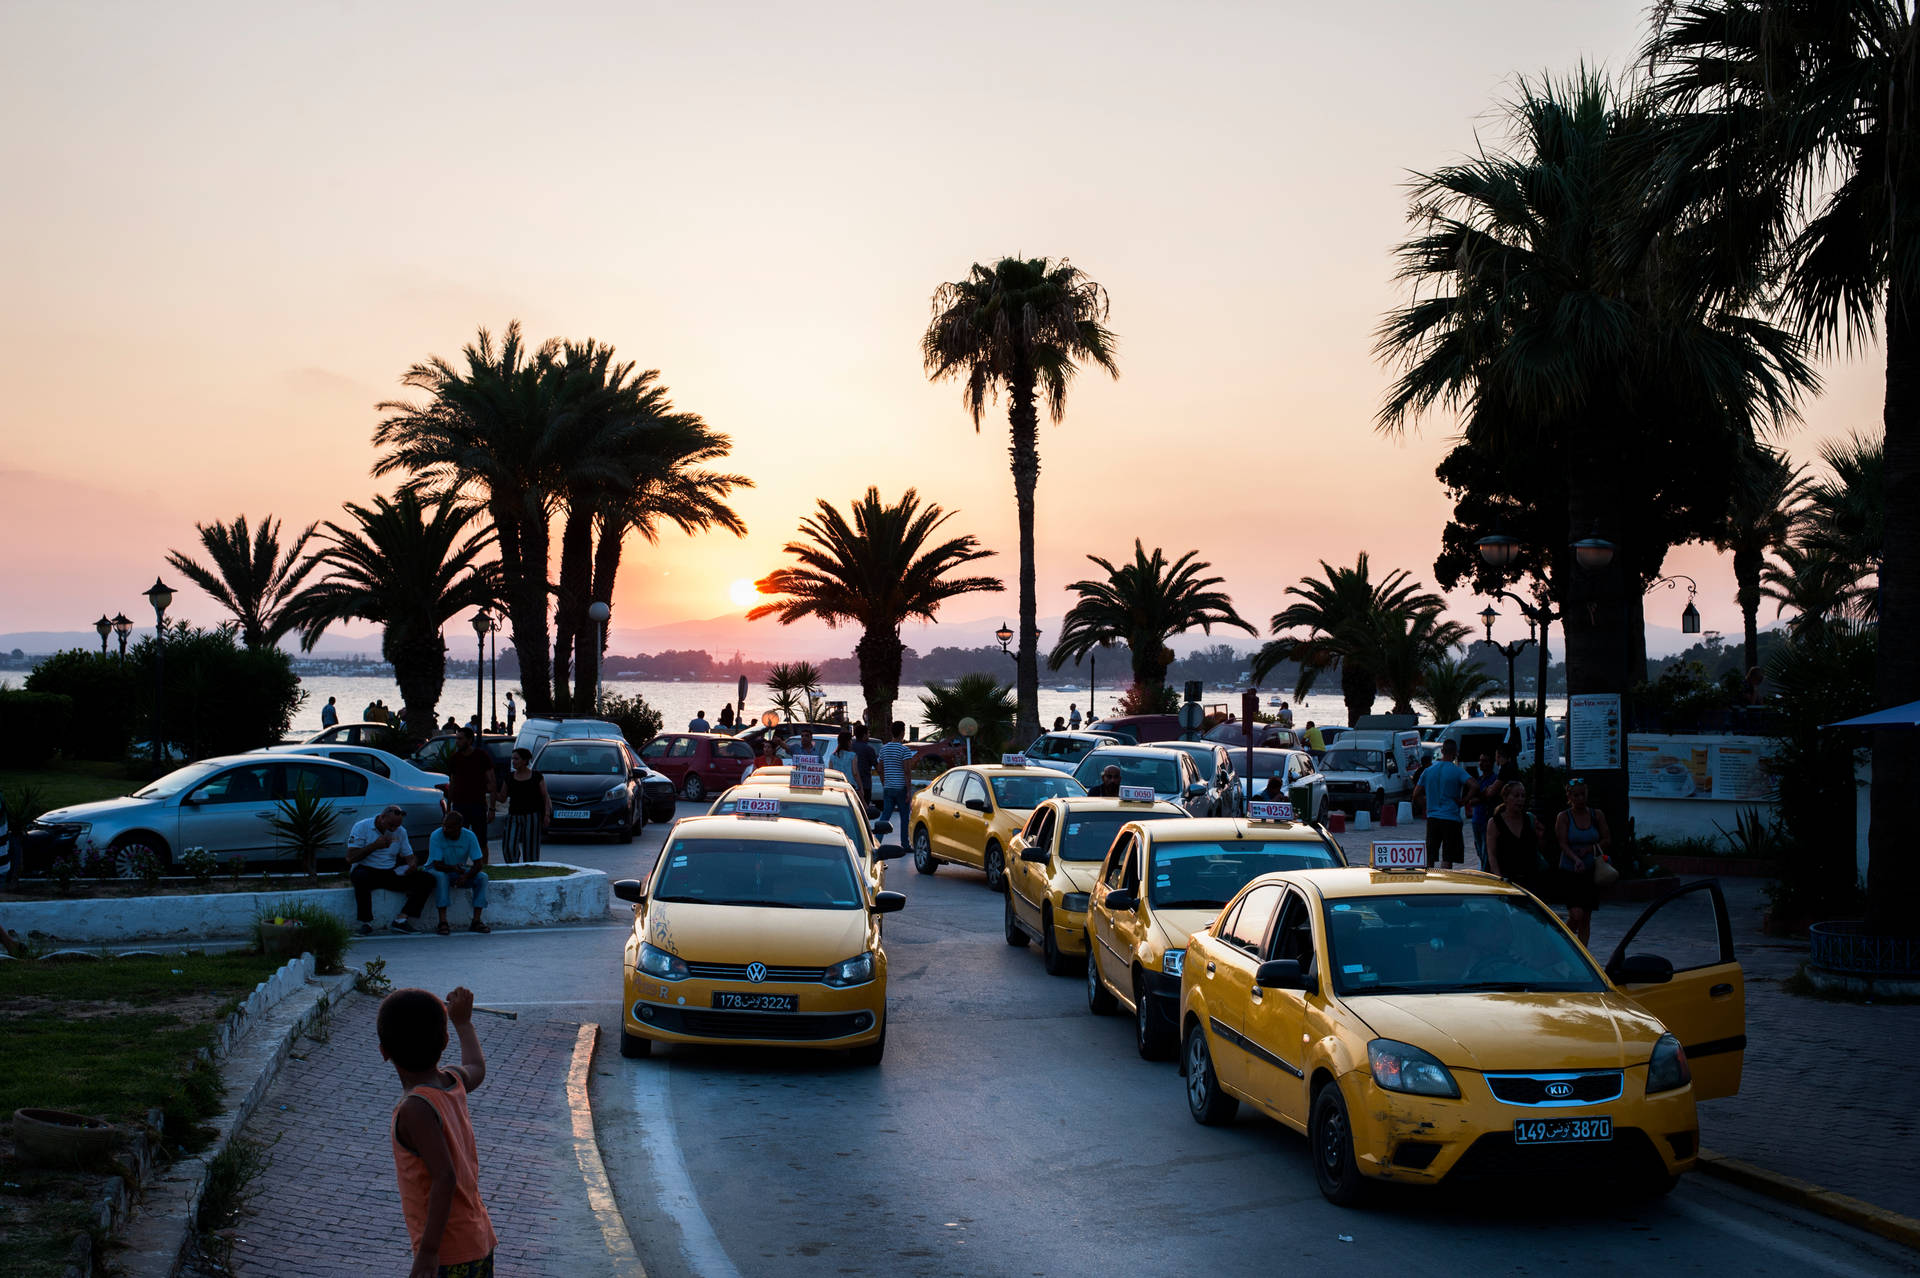 Tunisia Road Full Of Cars Background